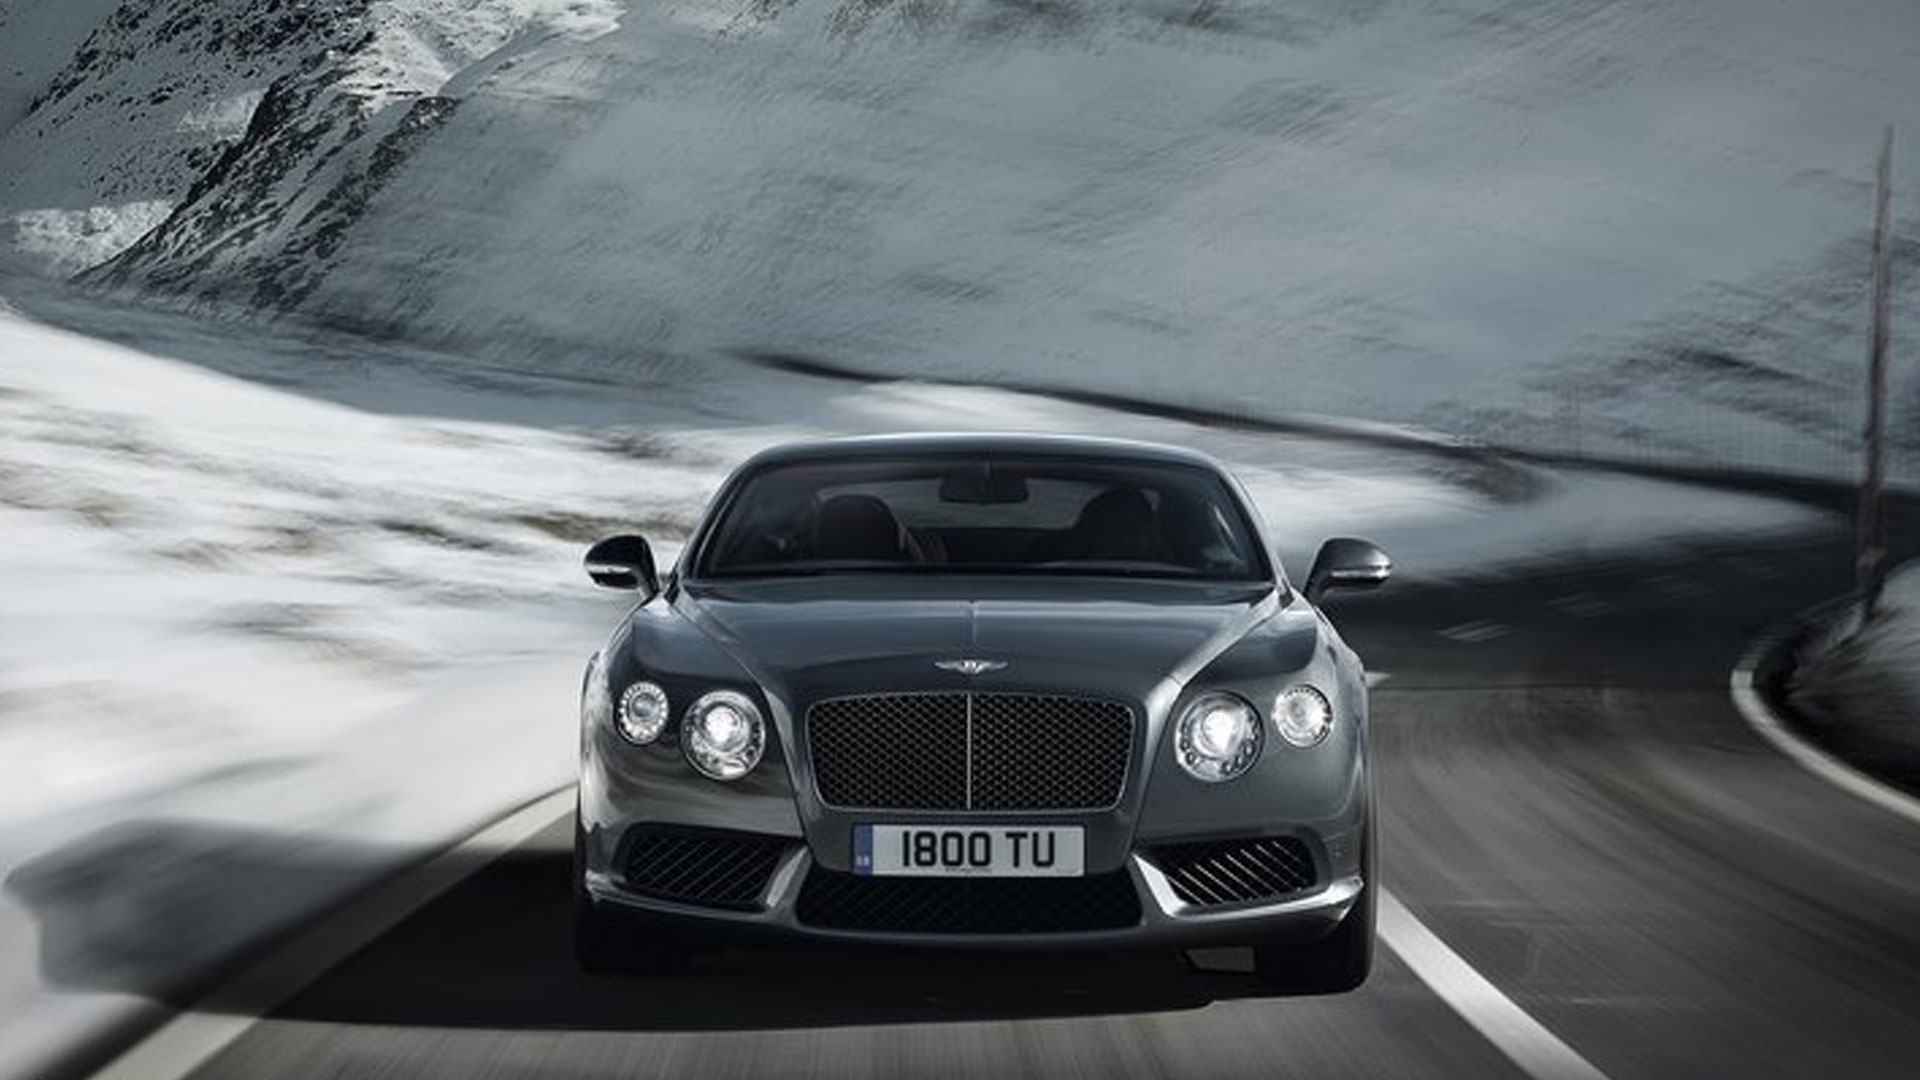 Bentley Continental Gt Speed HD Wallpaper Background Image